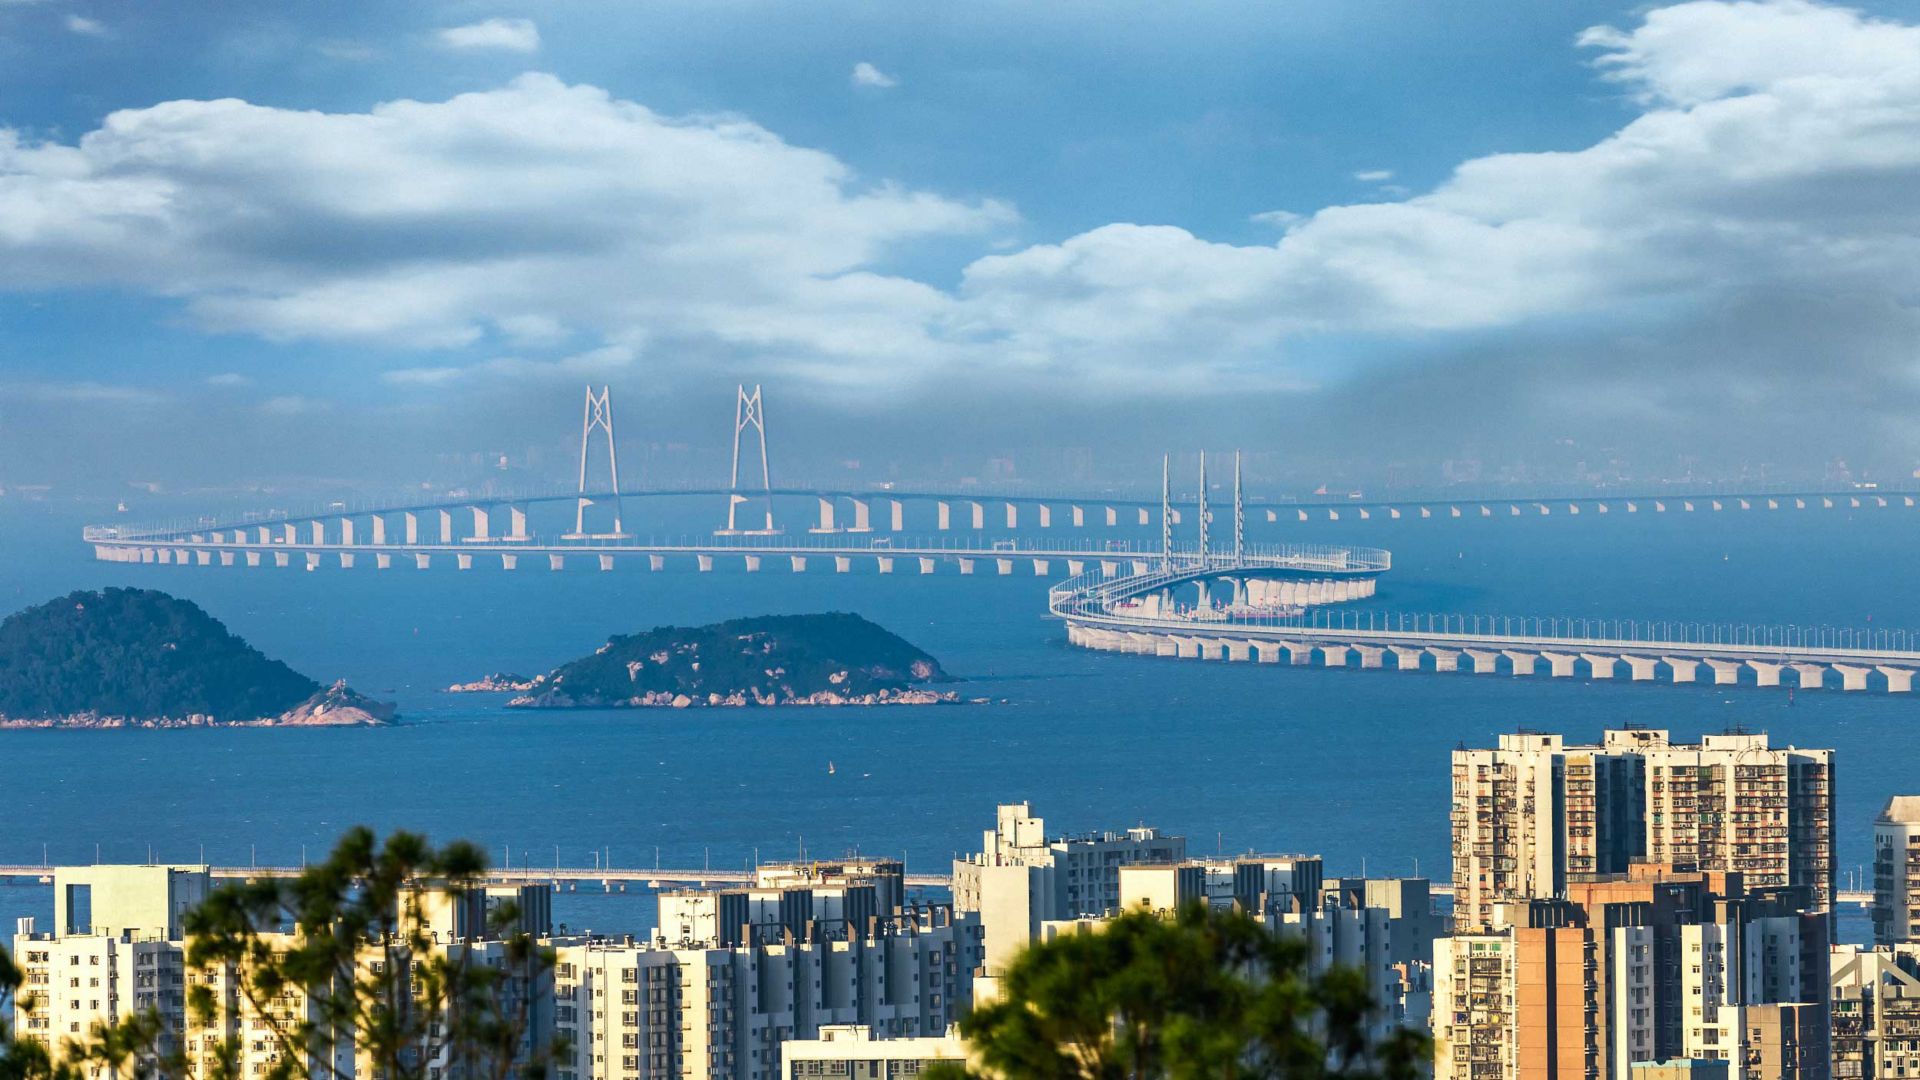 The Hong Kong-Zhuhai-Macao Bridge has broken many world records in engineering. SMART 